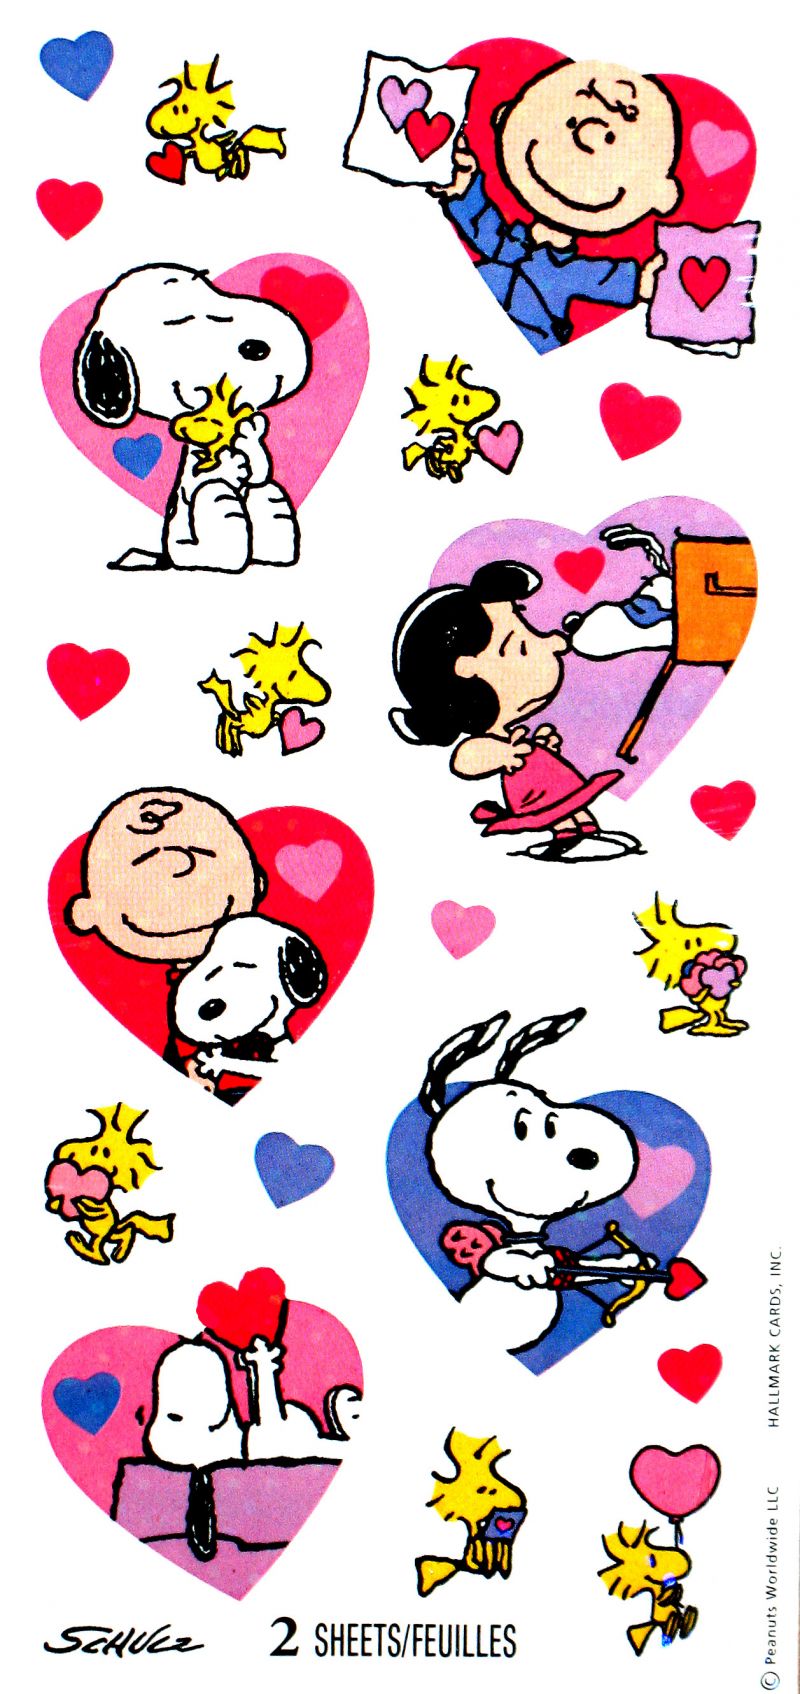 PEANUTS Valentine Stickers